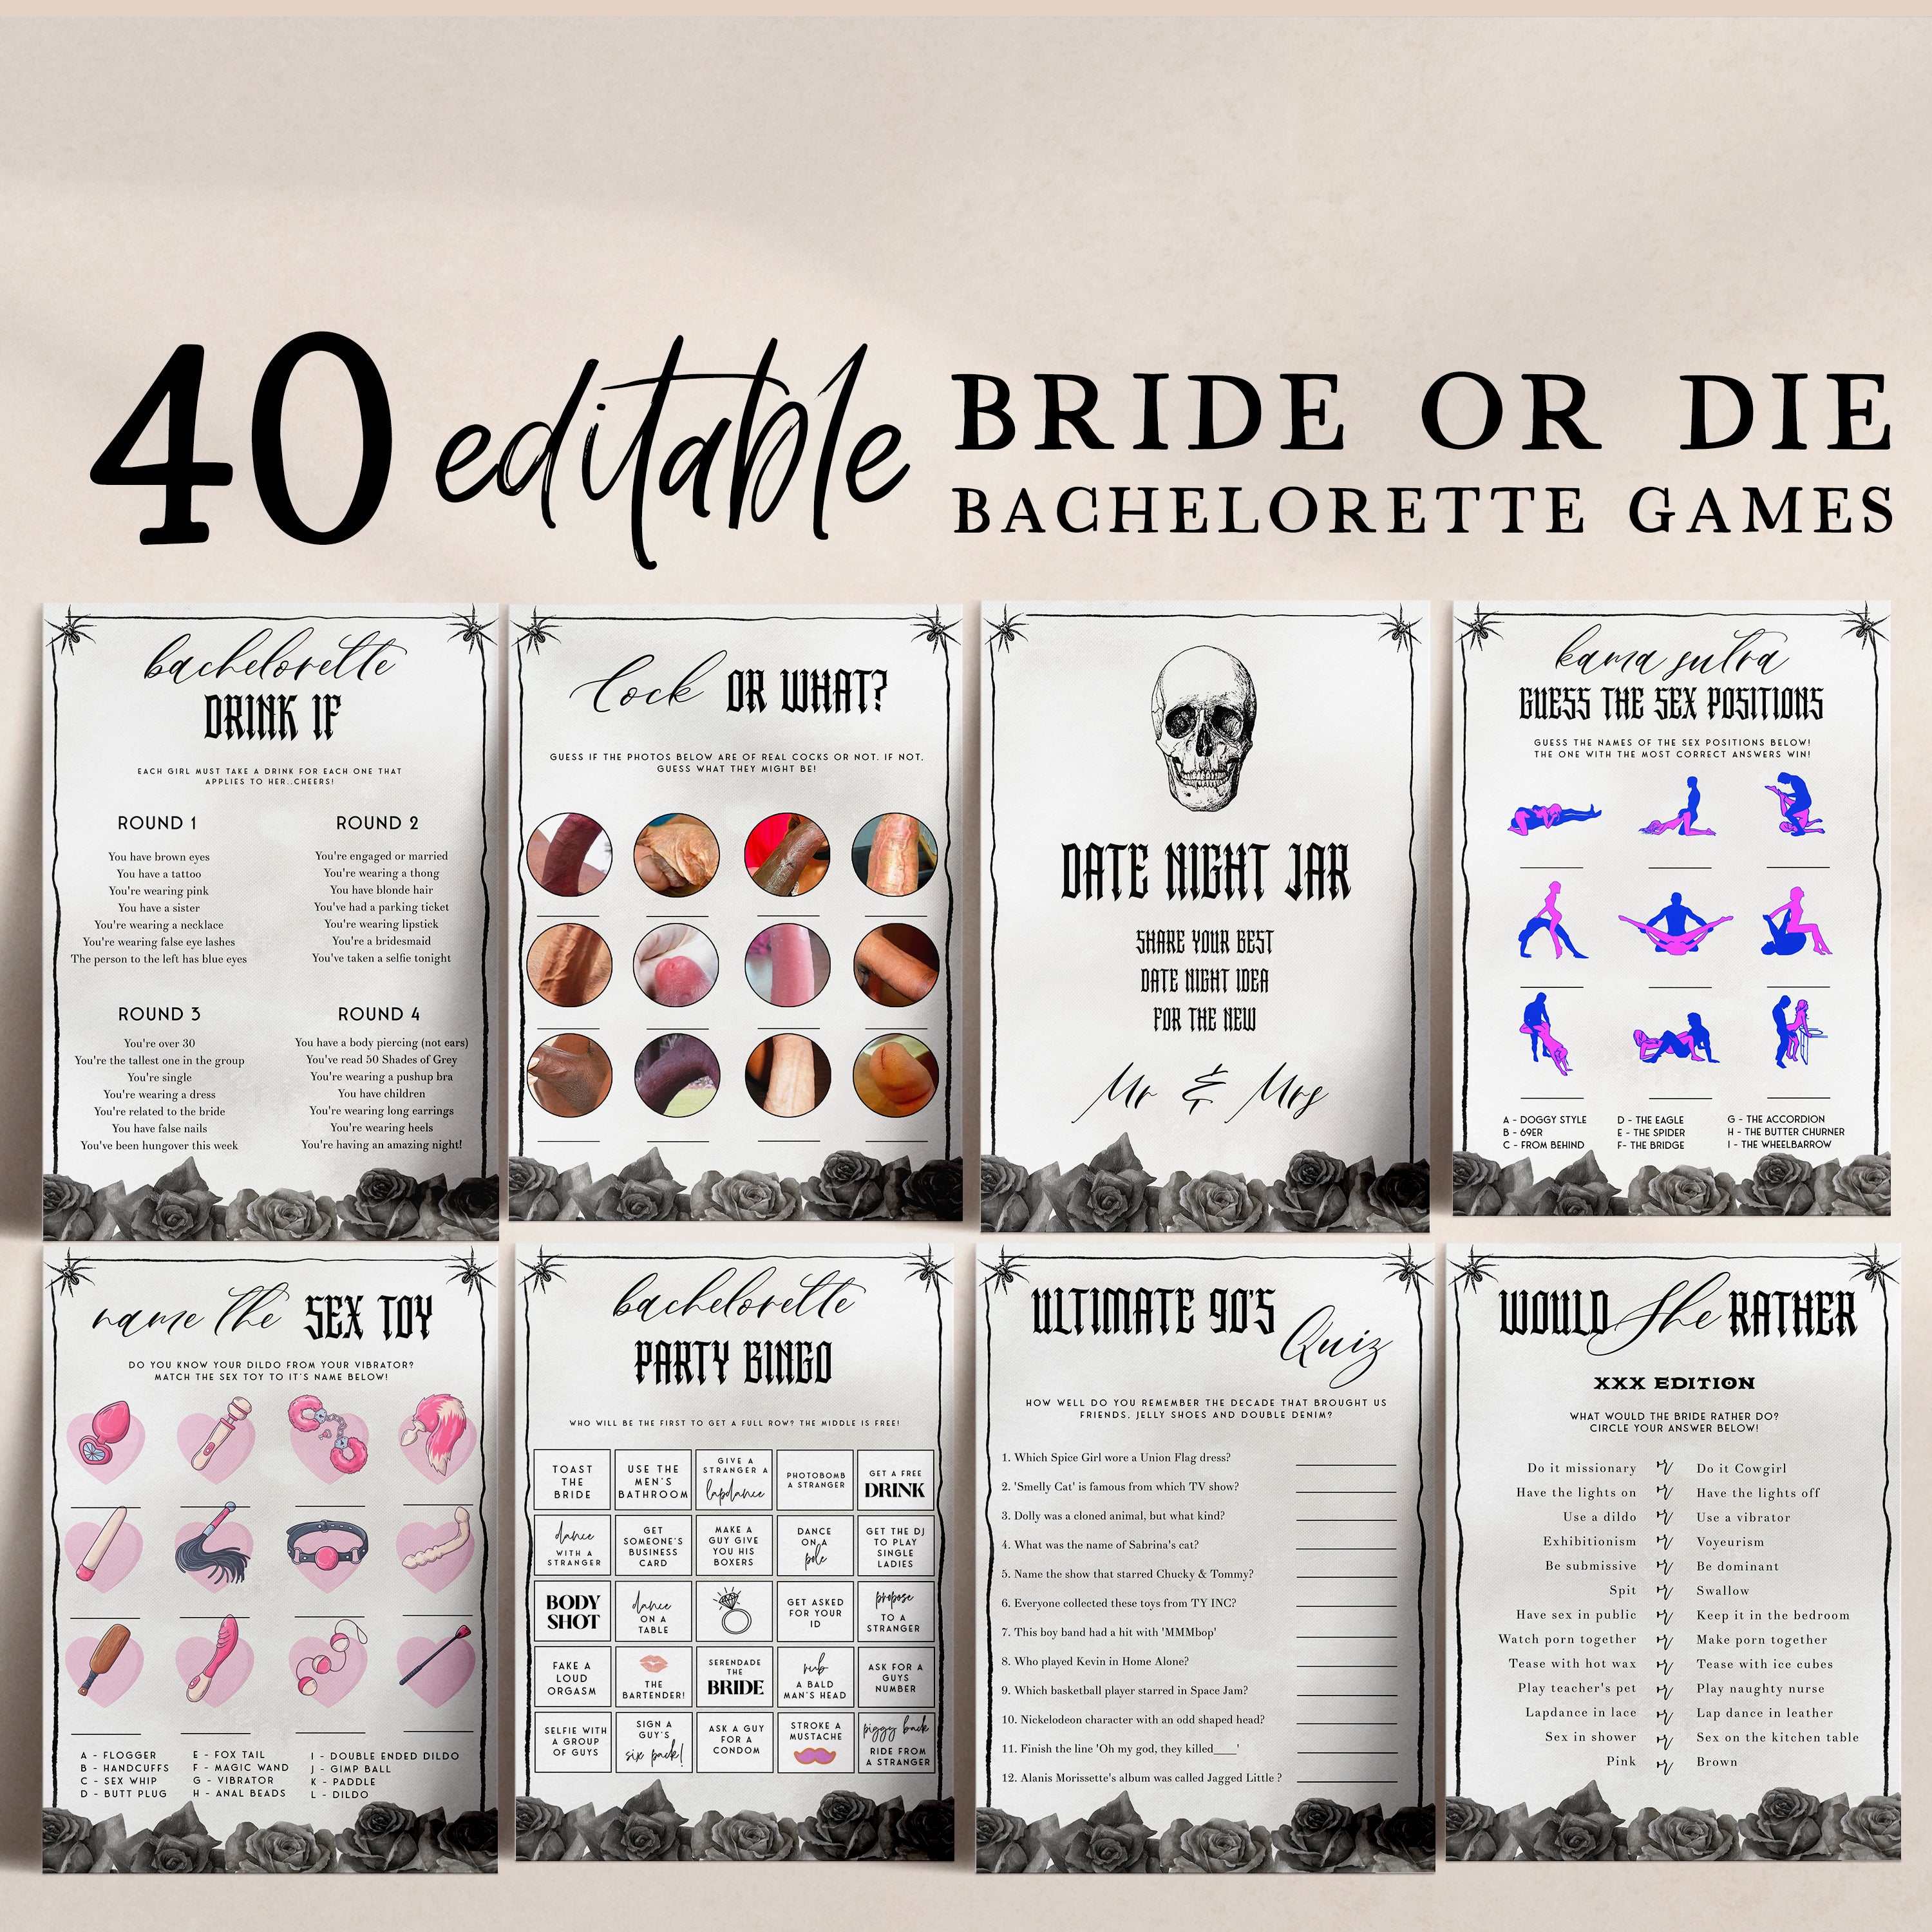 40 EDITABLE Bachelorette Games - Bride or Die Gothic Bachelorette